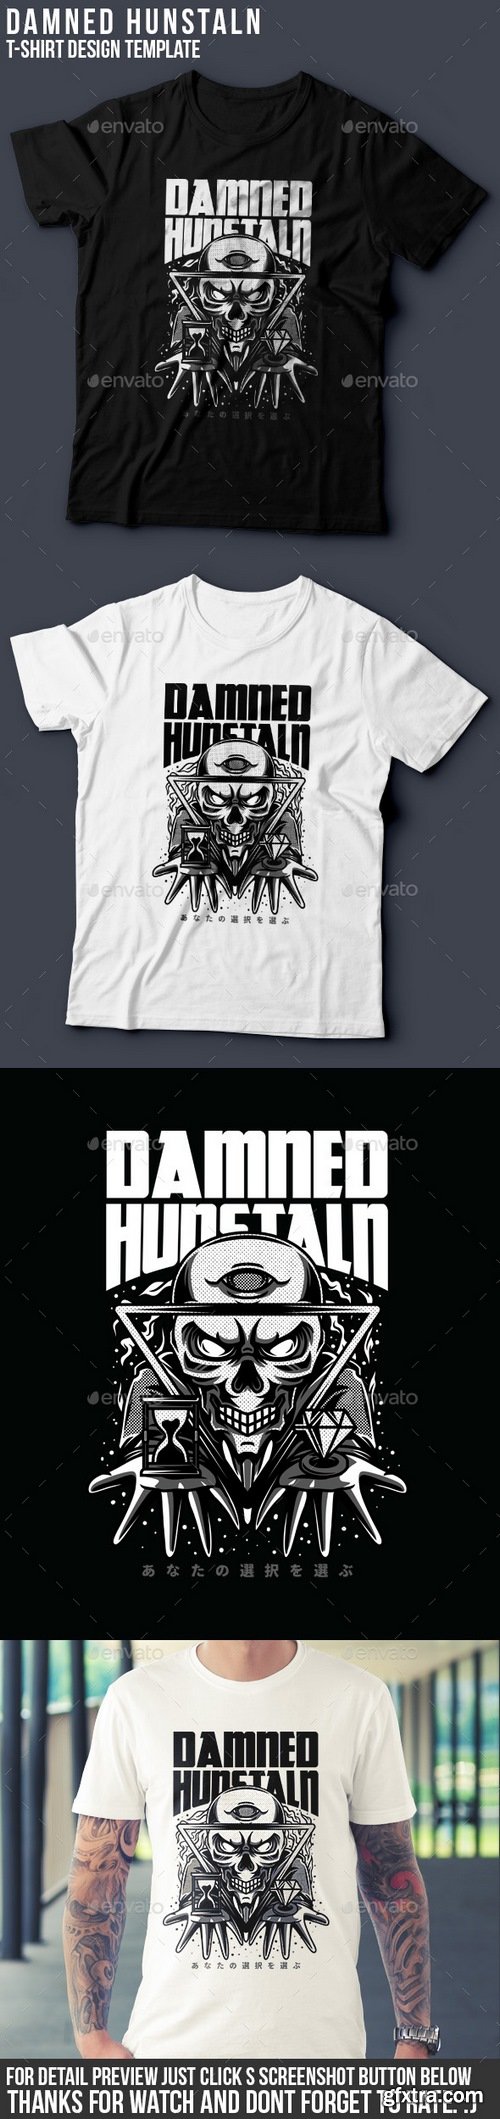 Graphicriver - Damned Hunstaln T-Shirt Design 20520143